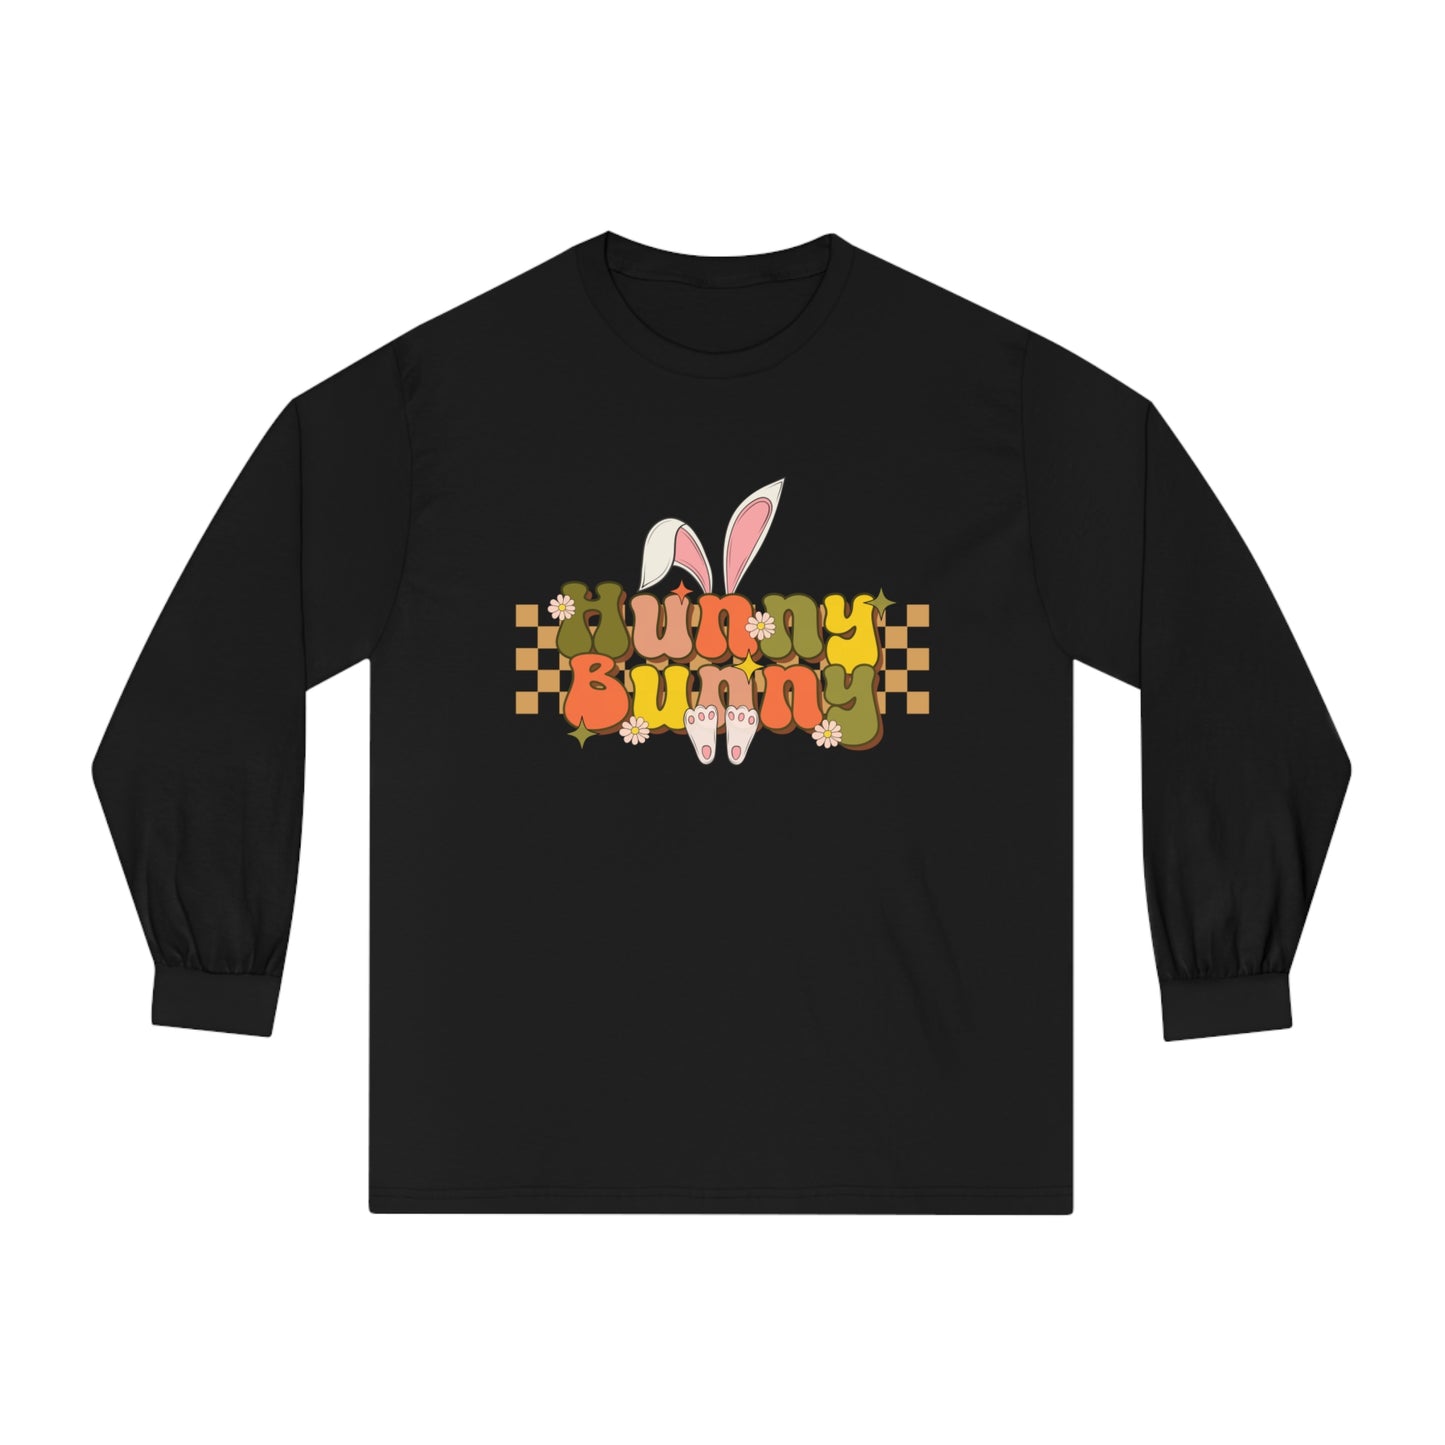 Hunny Bunny - Unisex Classic Long Sleeve T-Shirt